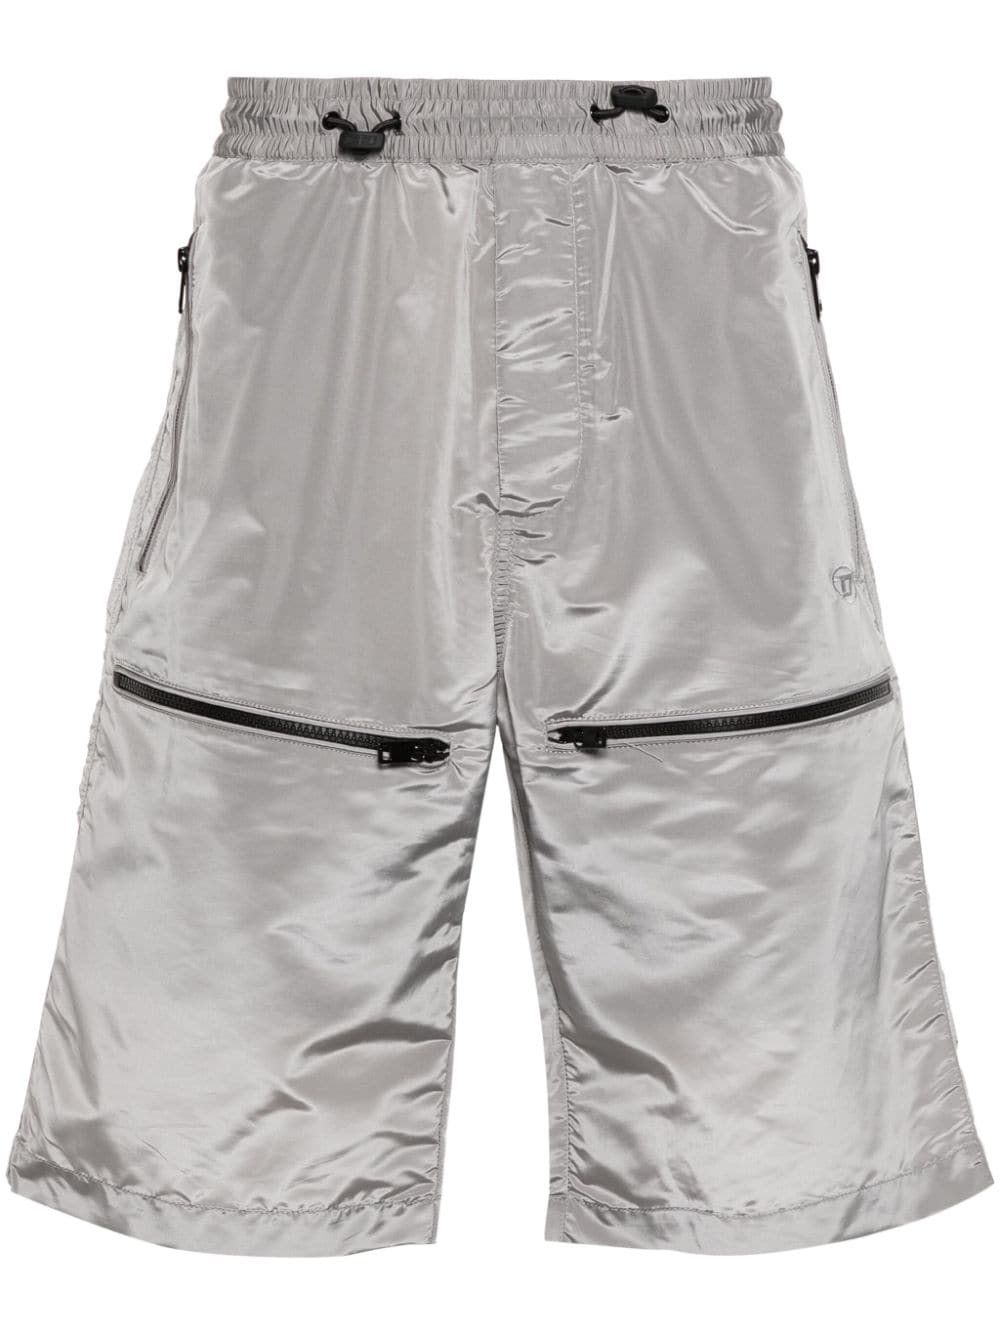 P-Mckell lightweight shorts - 1